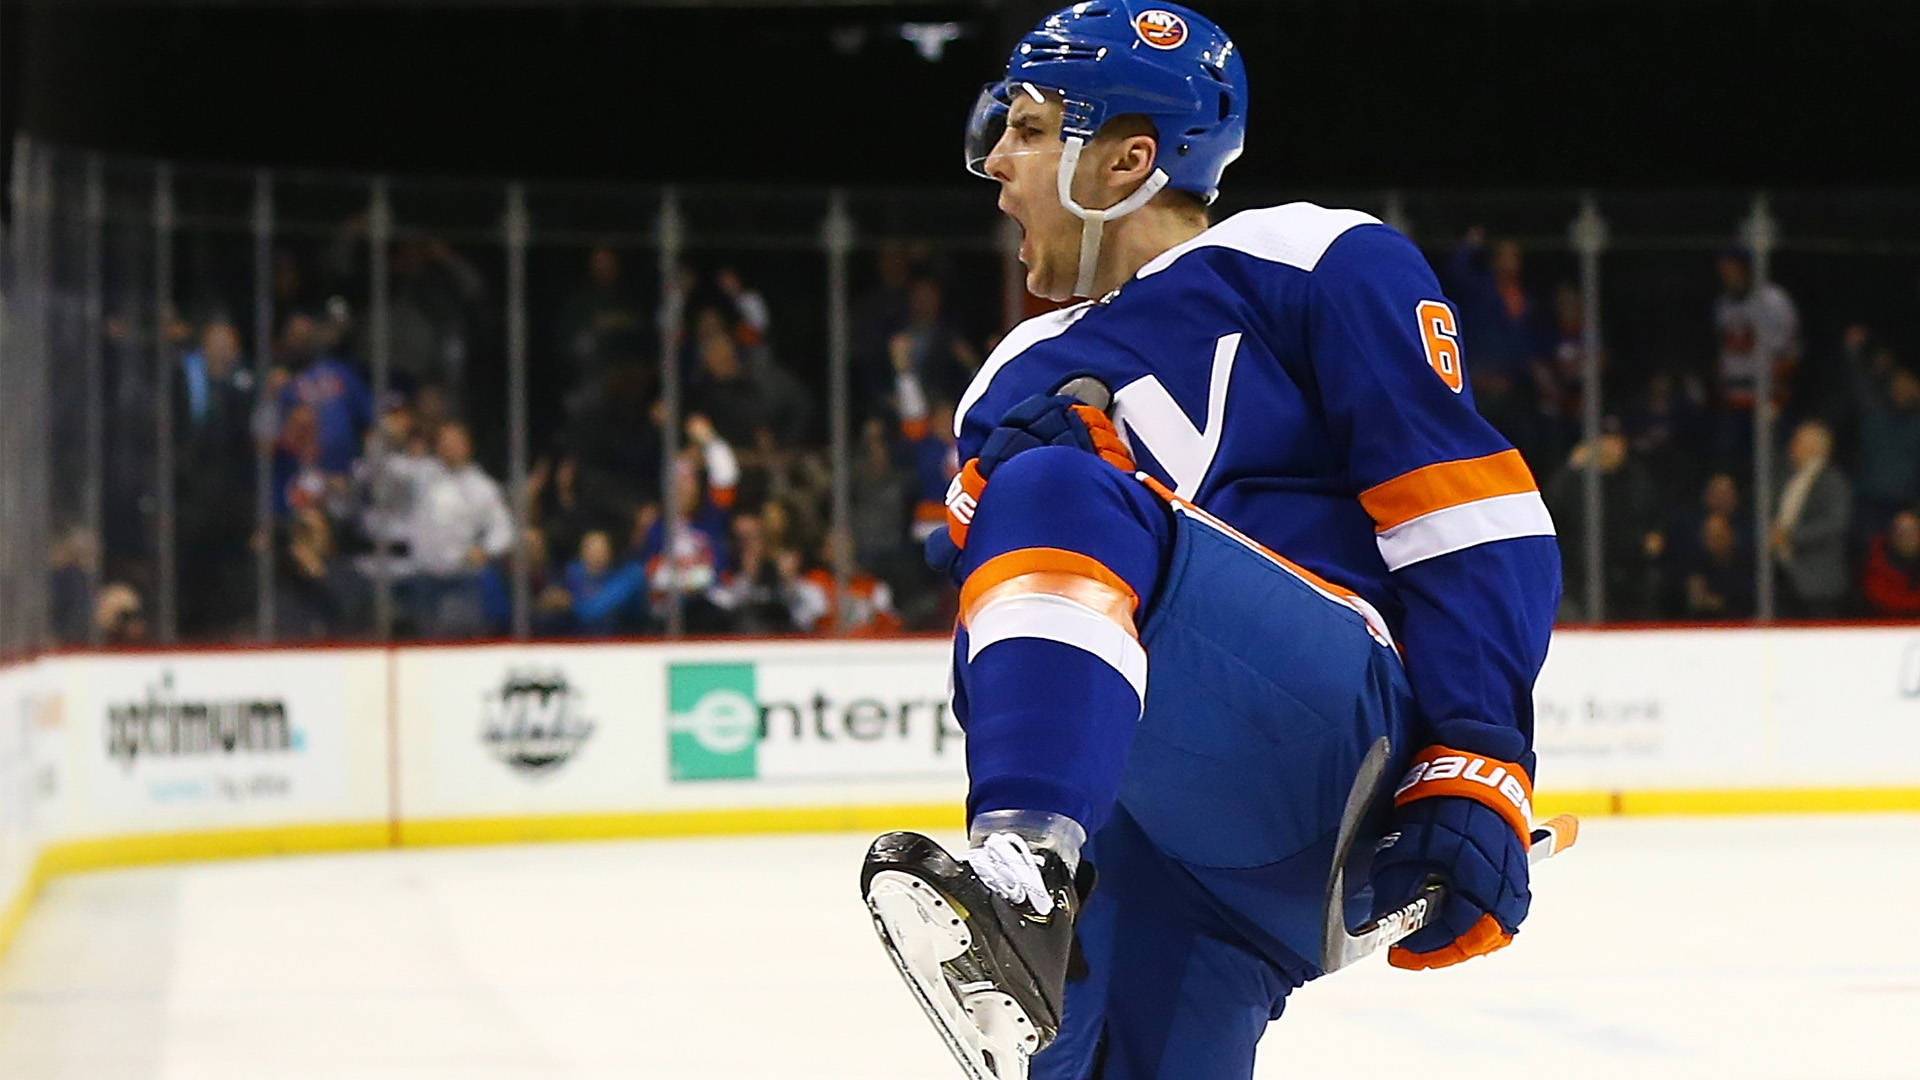 Screaming New York Islanders Player Background